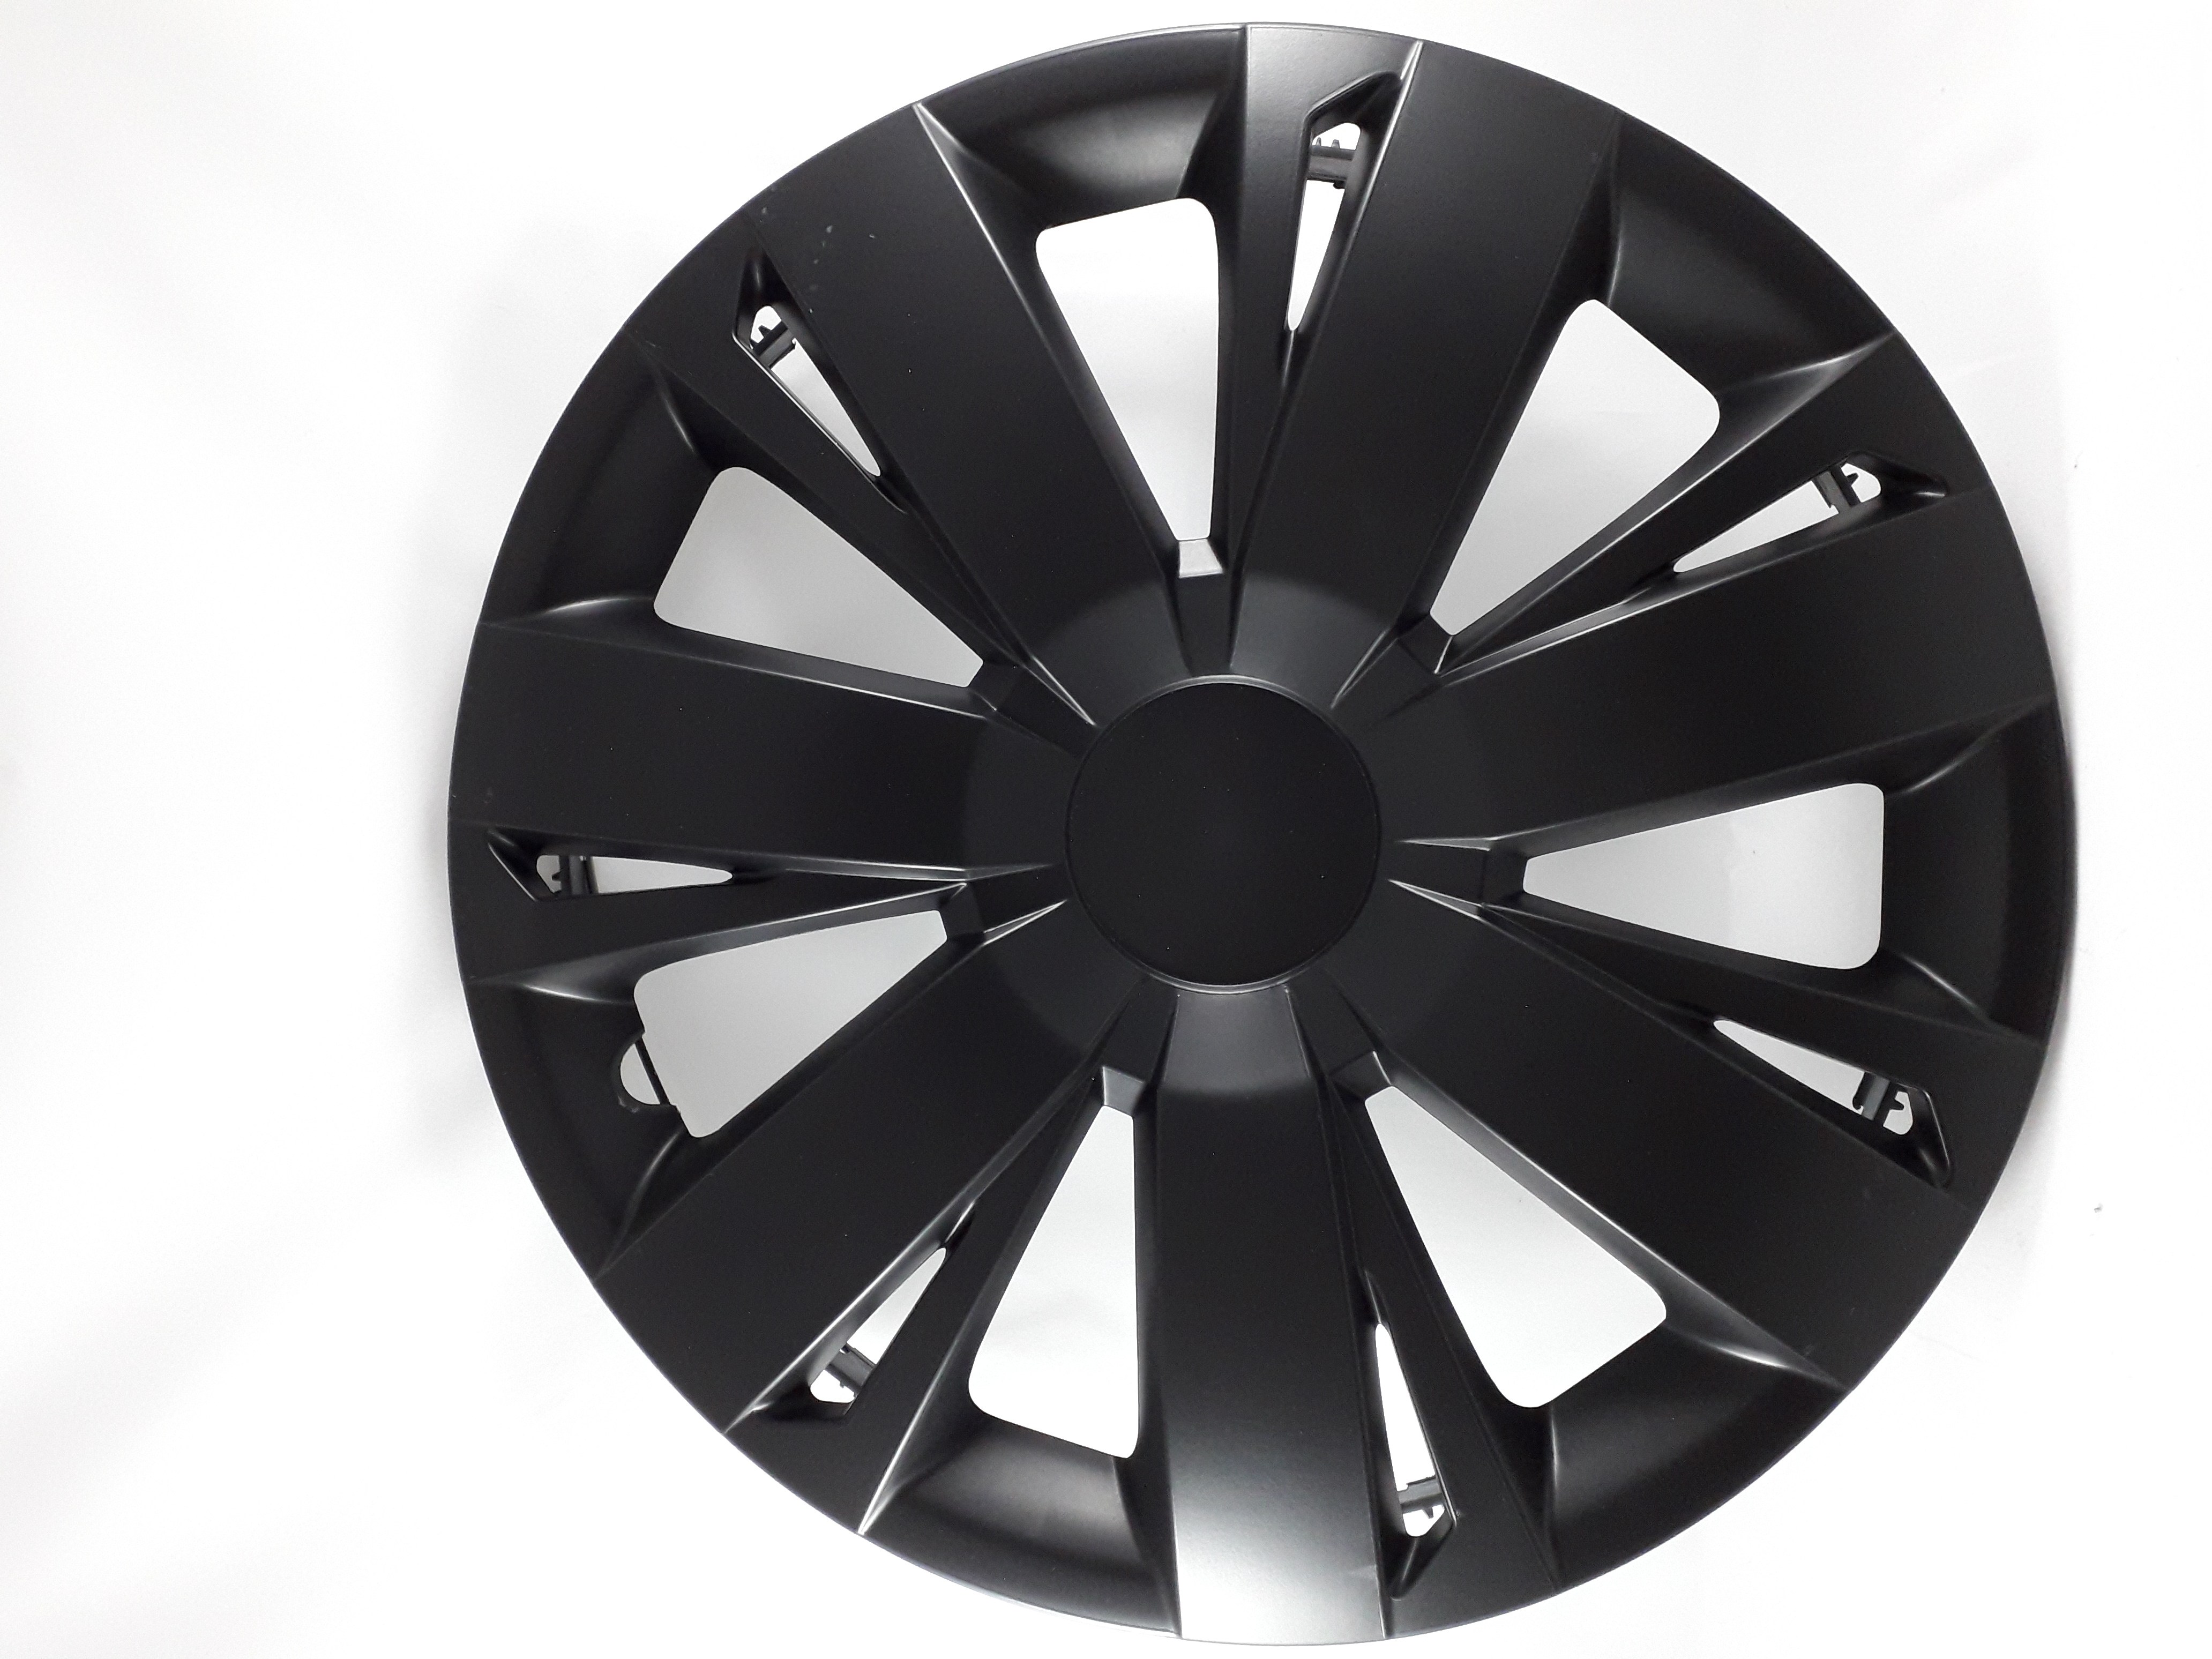 Decorative automotive wheel covers produced by Adi Group Ltd (black).